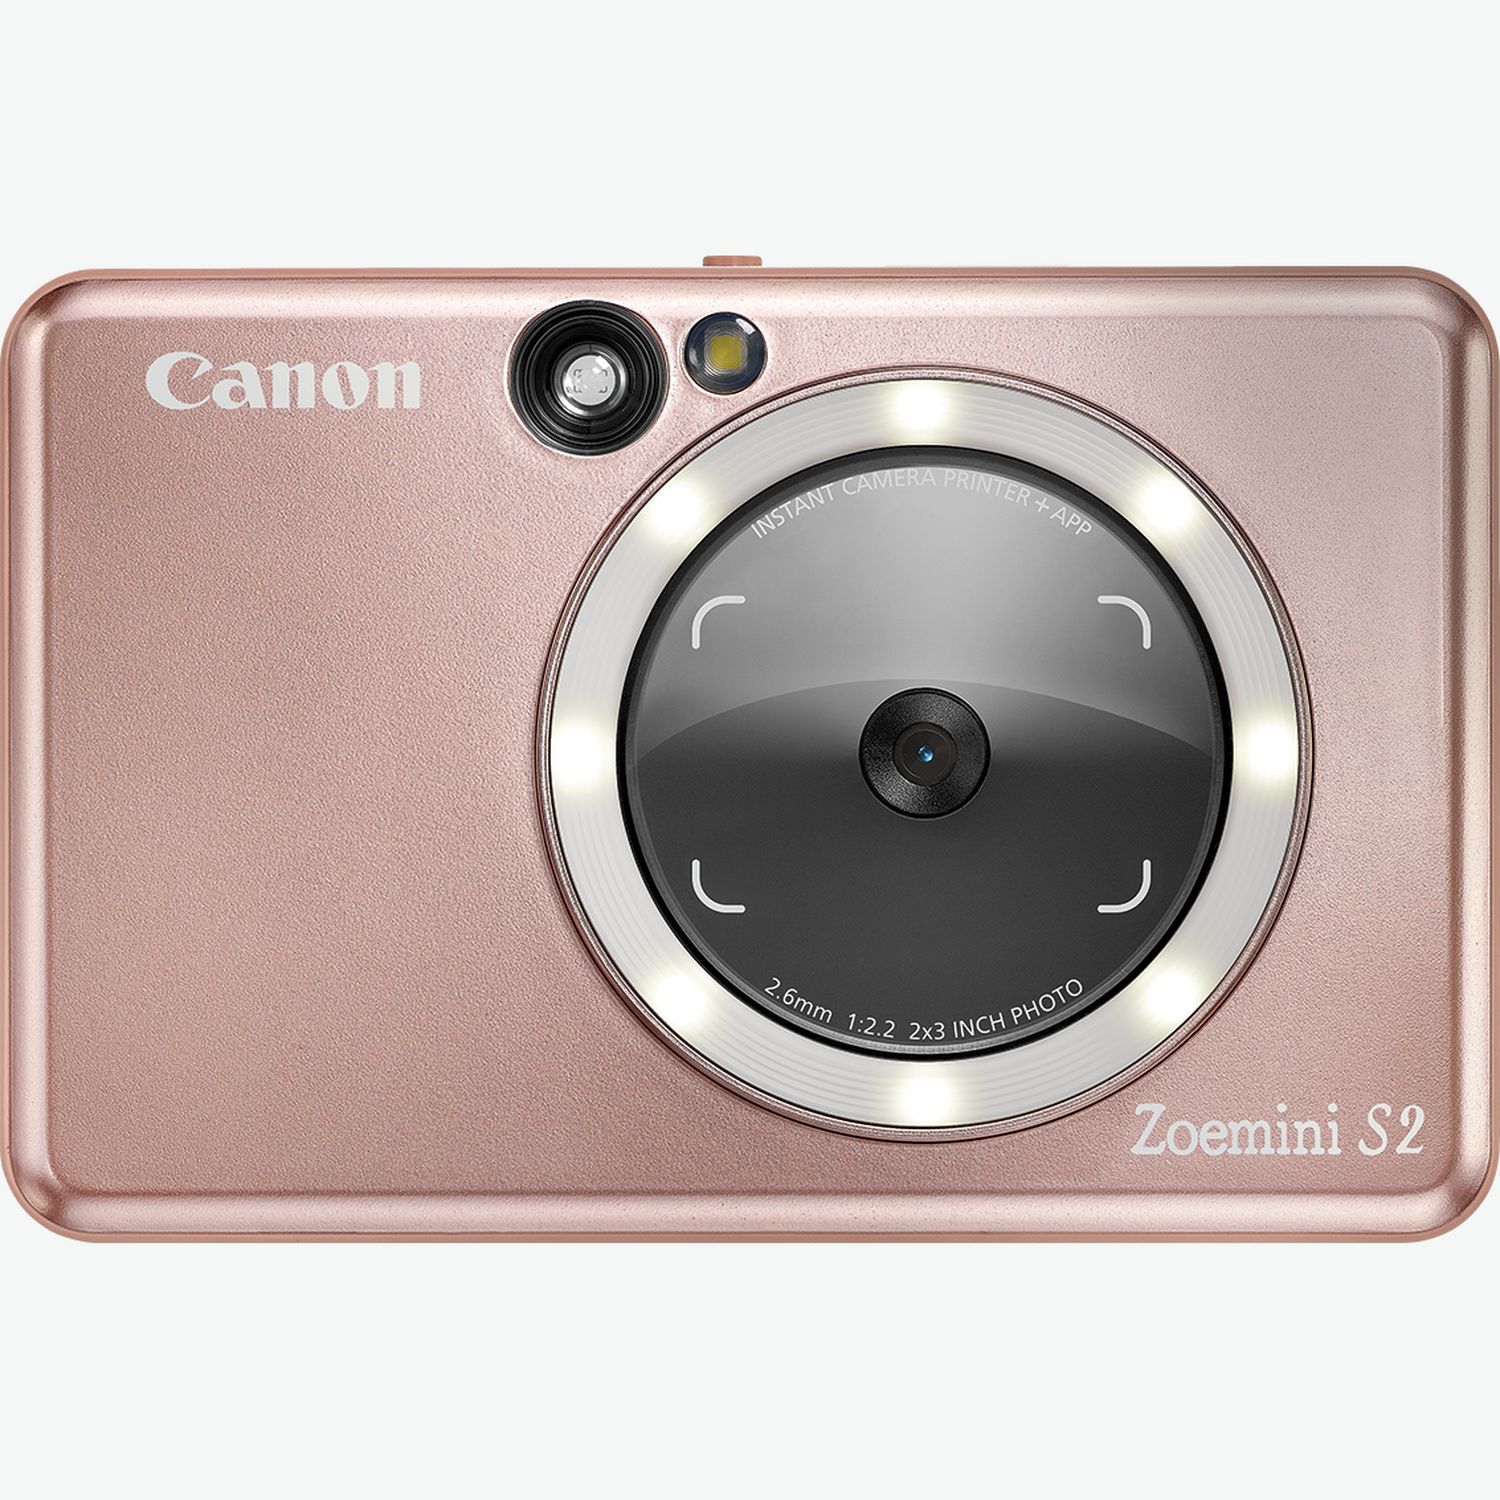 Canon Zoemini - Imprimante photo portable - Noir